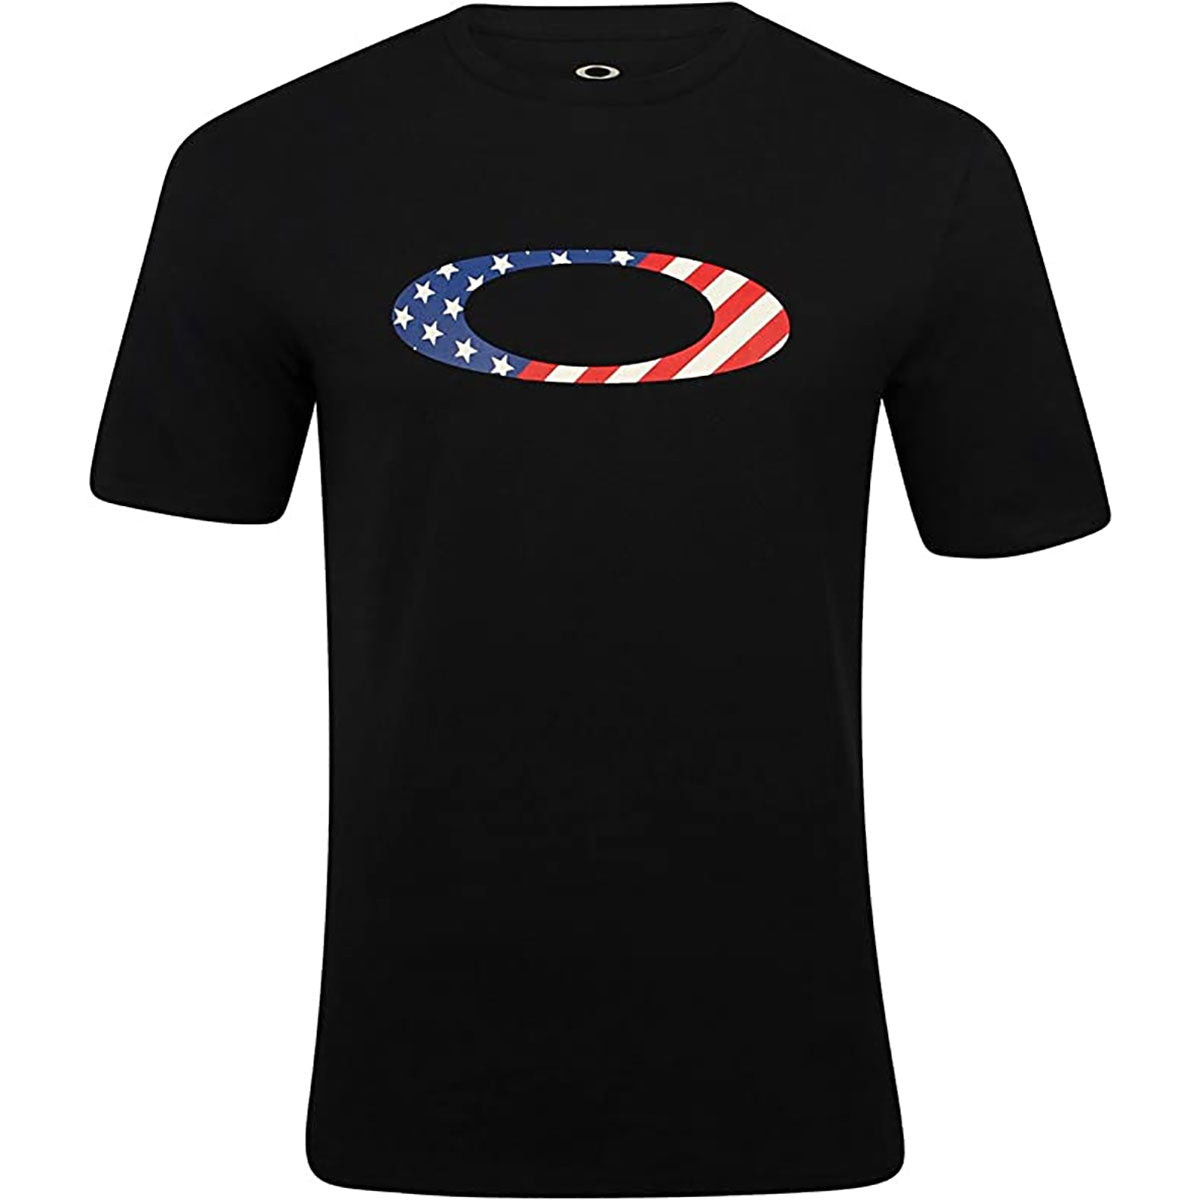 Oakley SC-USA Flag Men's Short-Sleeve Shirts (Brand New) – OriginBoardshop  - Skate/Surf/Sports